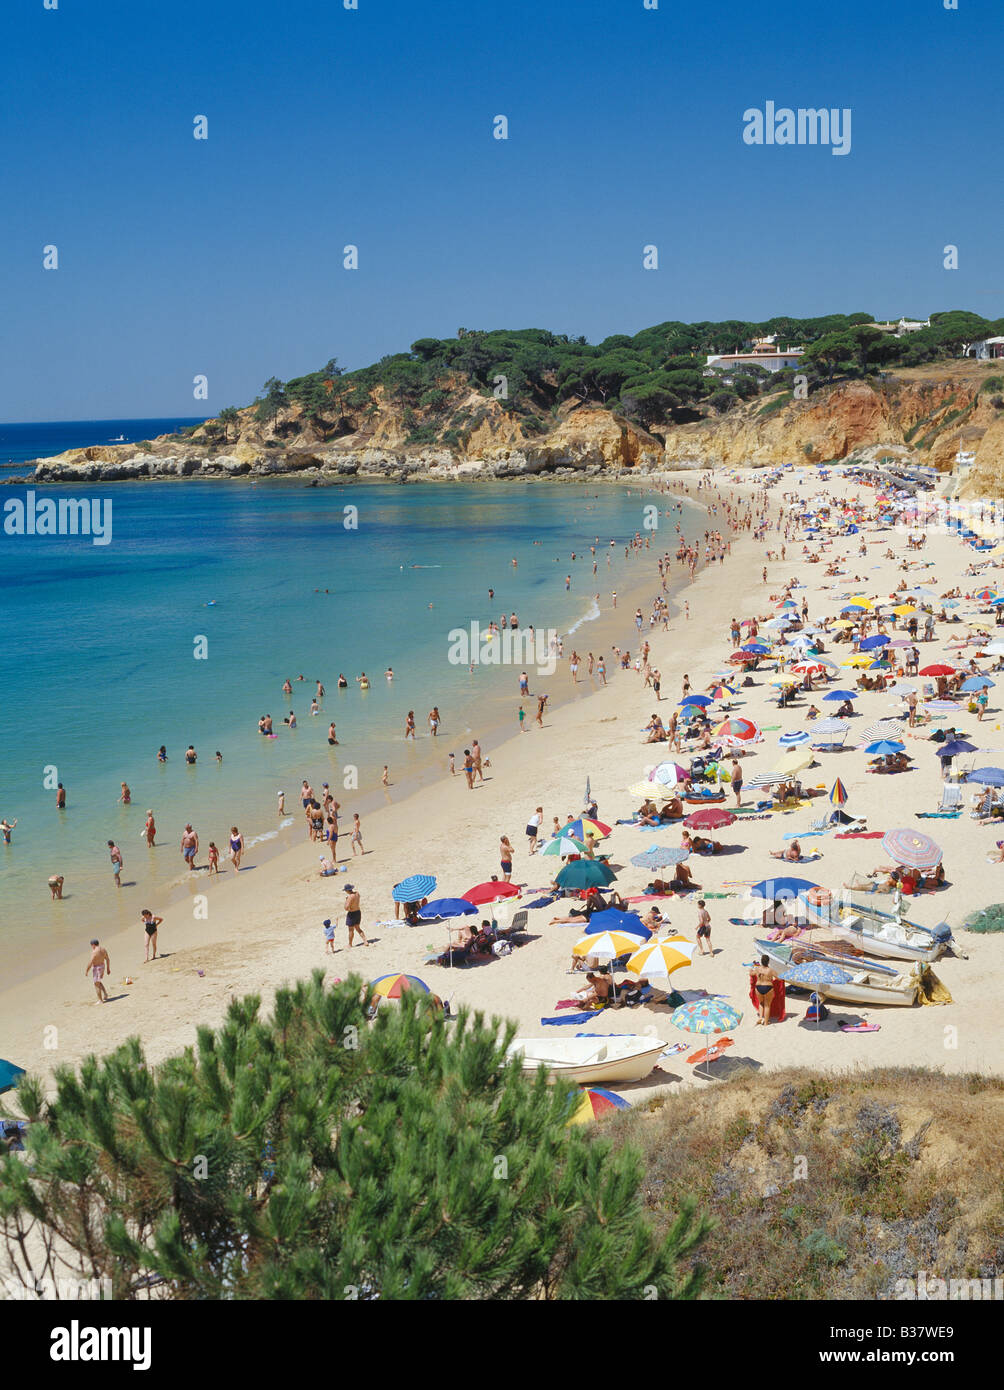 Portugal, Algarve, Albufeira, Praia de Santa Eulalia Beach Stockfoto